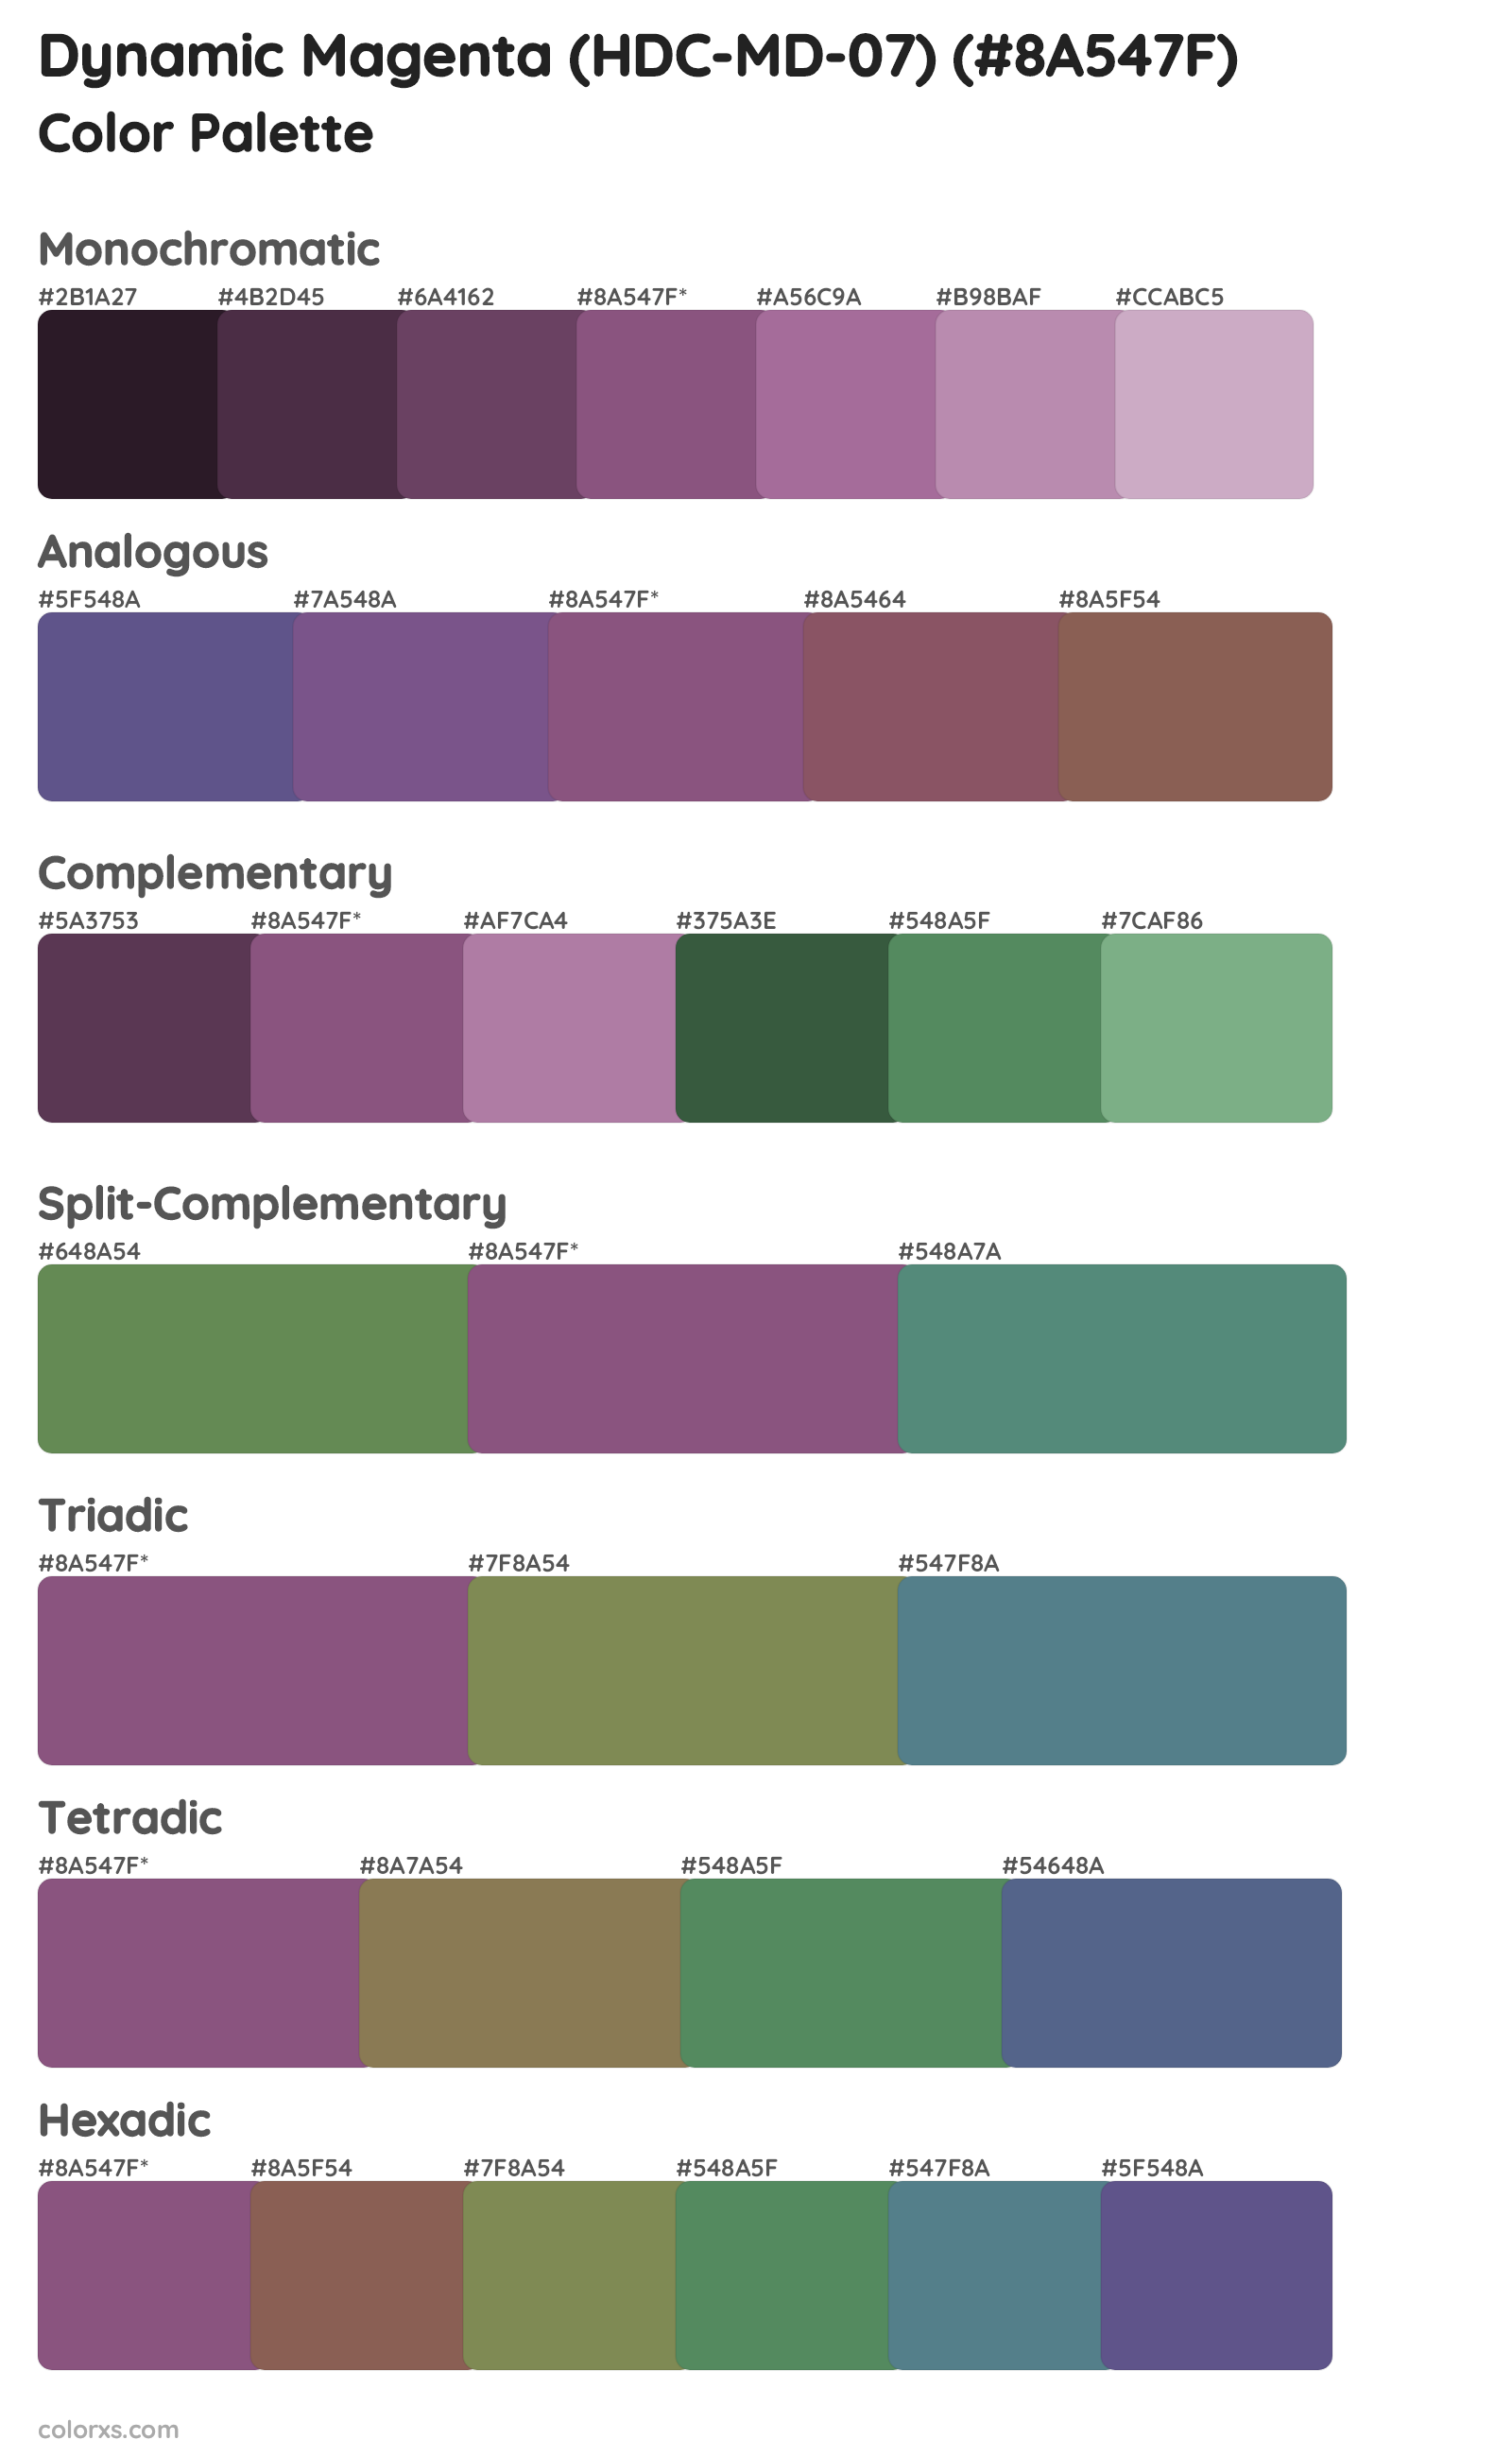 Dynamic Magenta (HDC-MD-07) Color Scheme Palettes